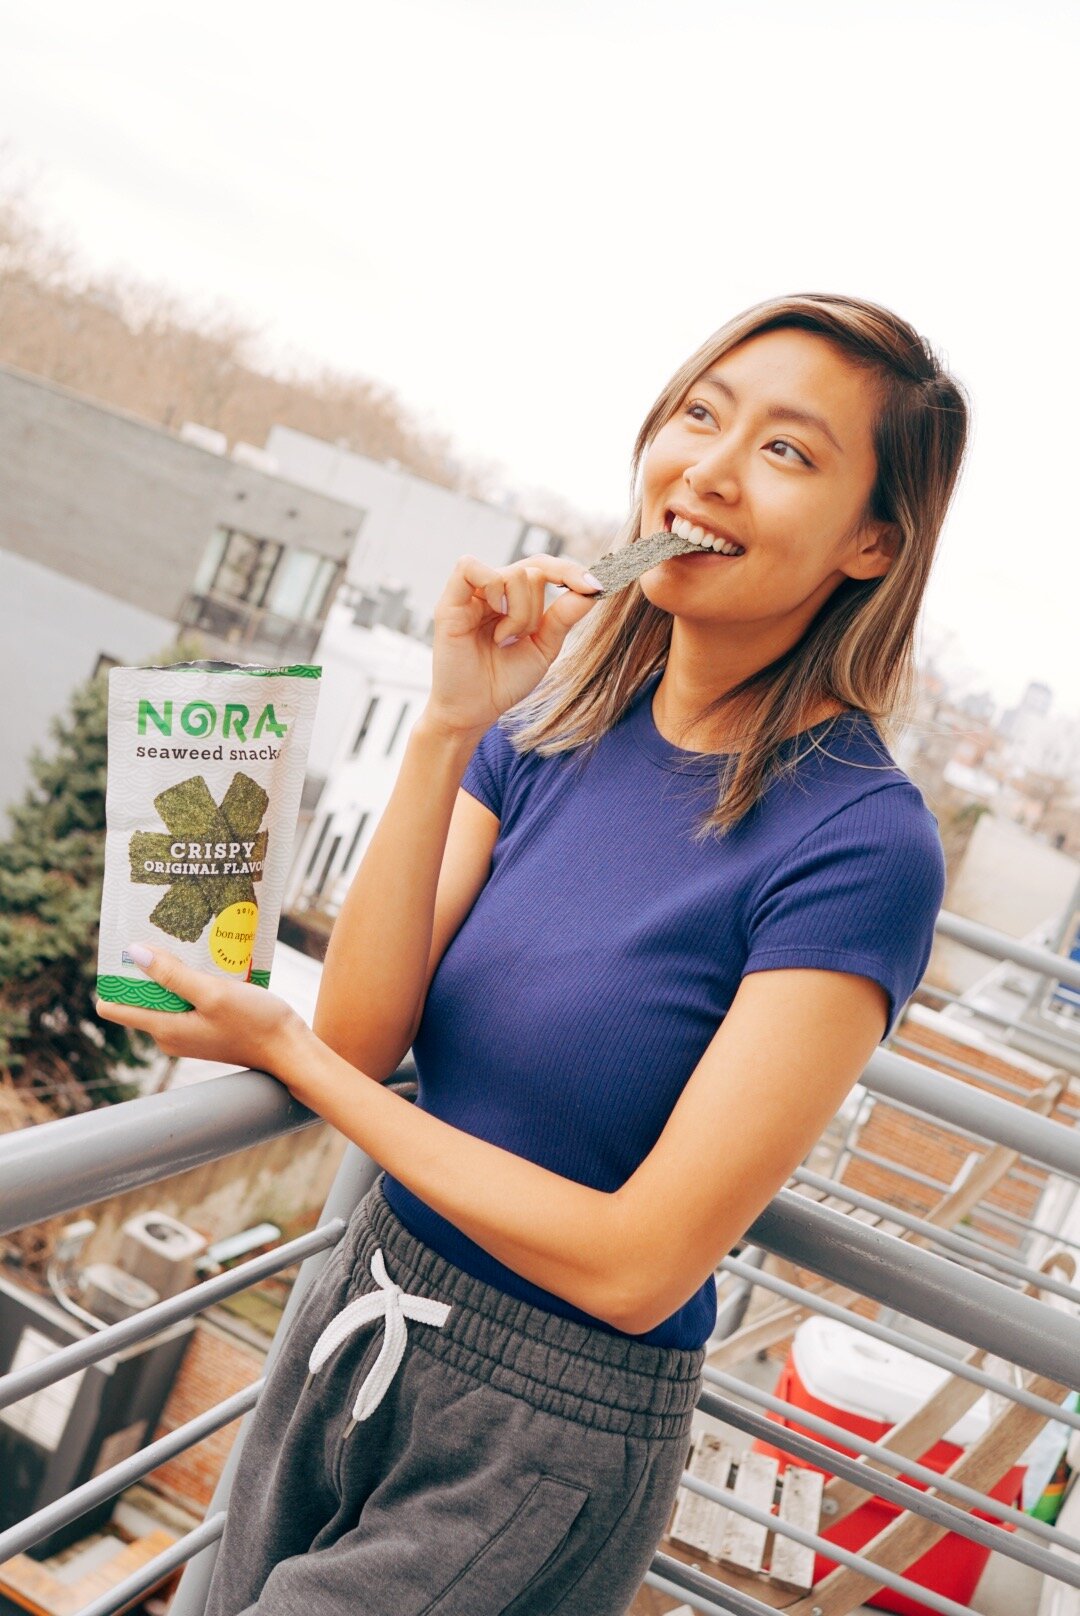 Nora Snacks Original Crispy 6-Pack